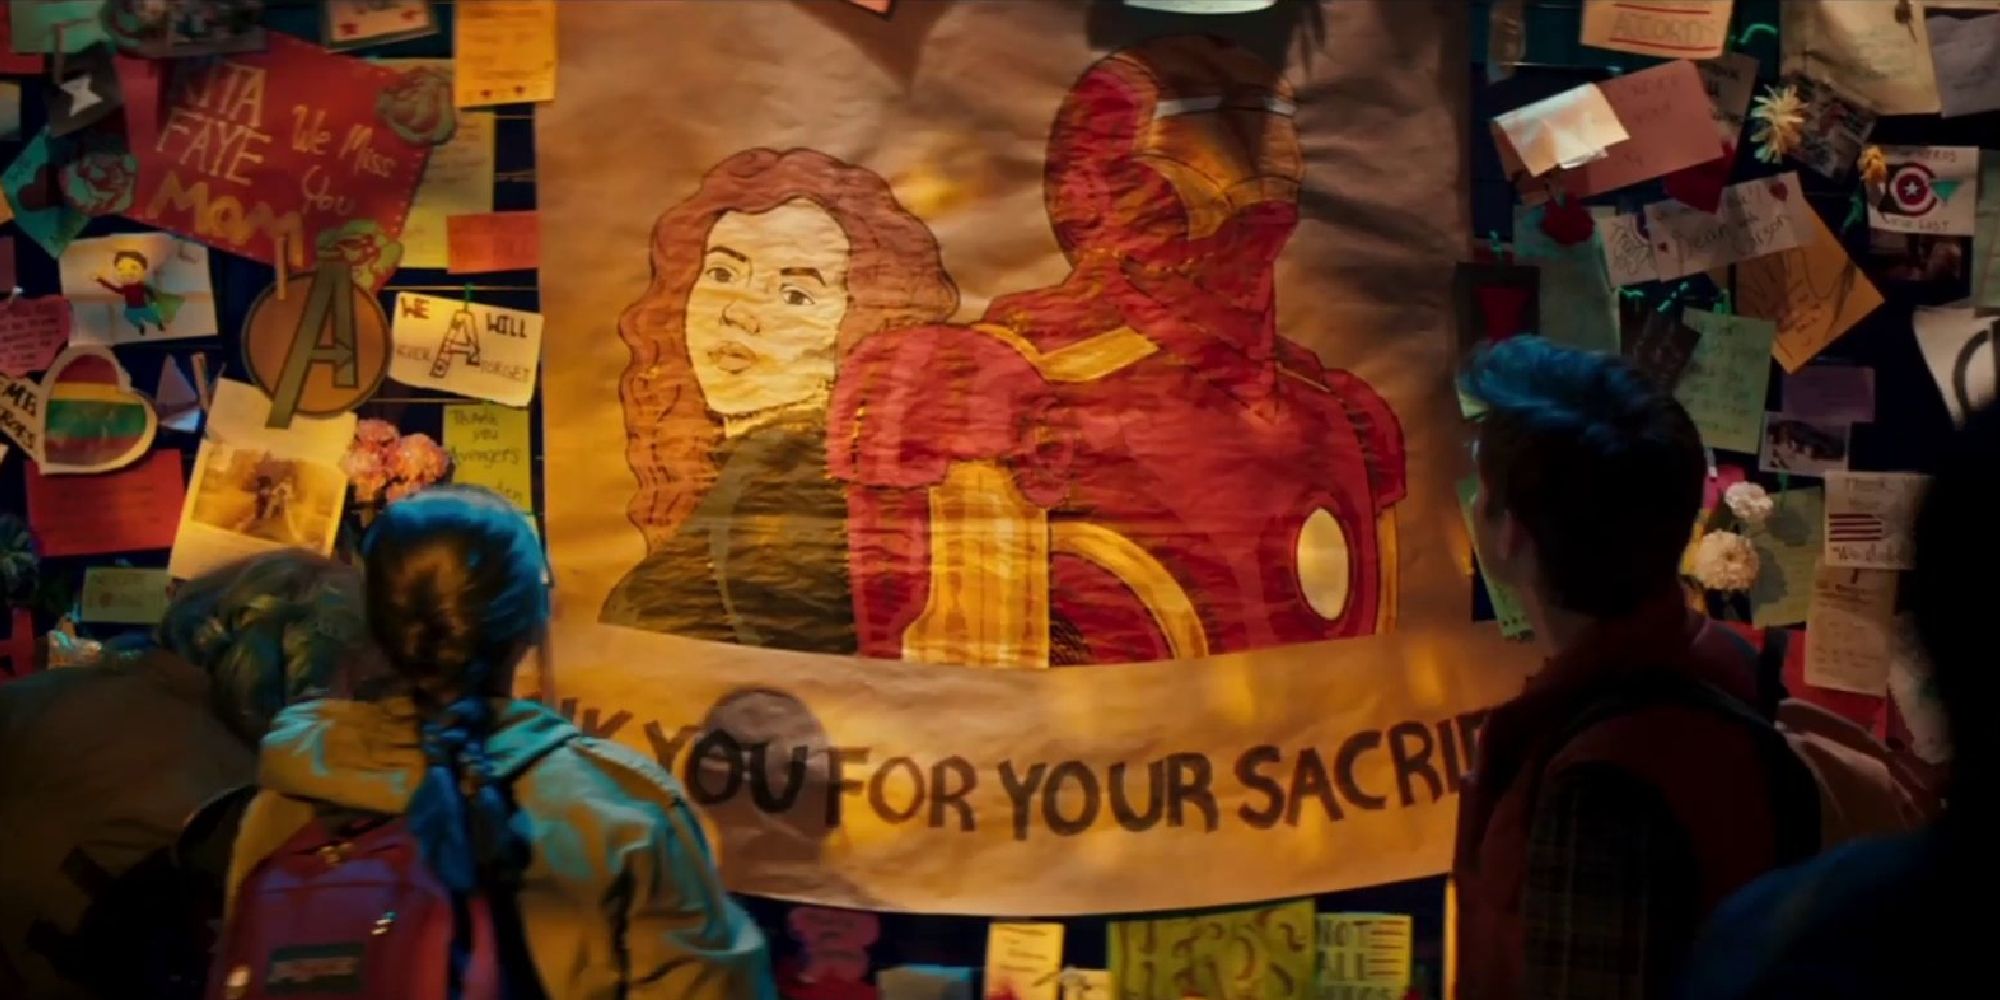 A tribute to Tony Stark and Natasha Romanoff at AvengerCon in Ms Marvel's pilot episode